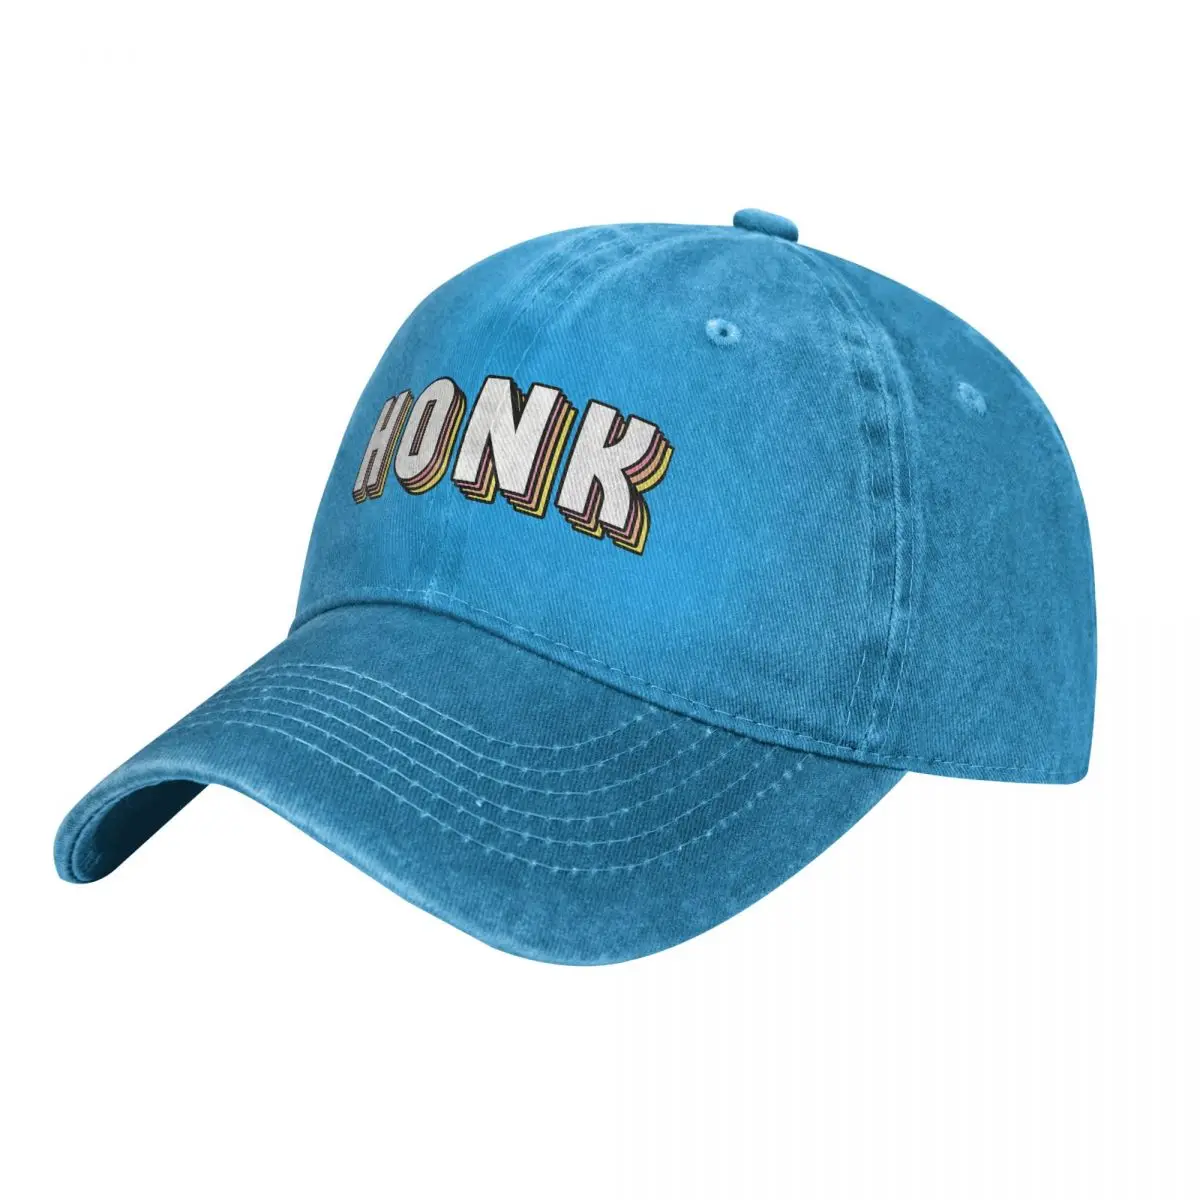 Застиранная Мужская Бейсболка Cool Trucker Snapback Caps Папина Шляпа Без Названия Goose Game Honk Шляпы для Гольфа